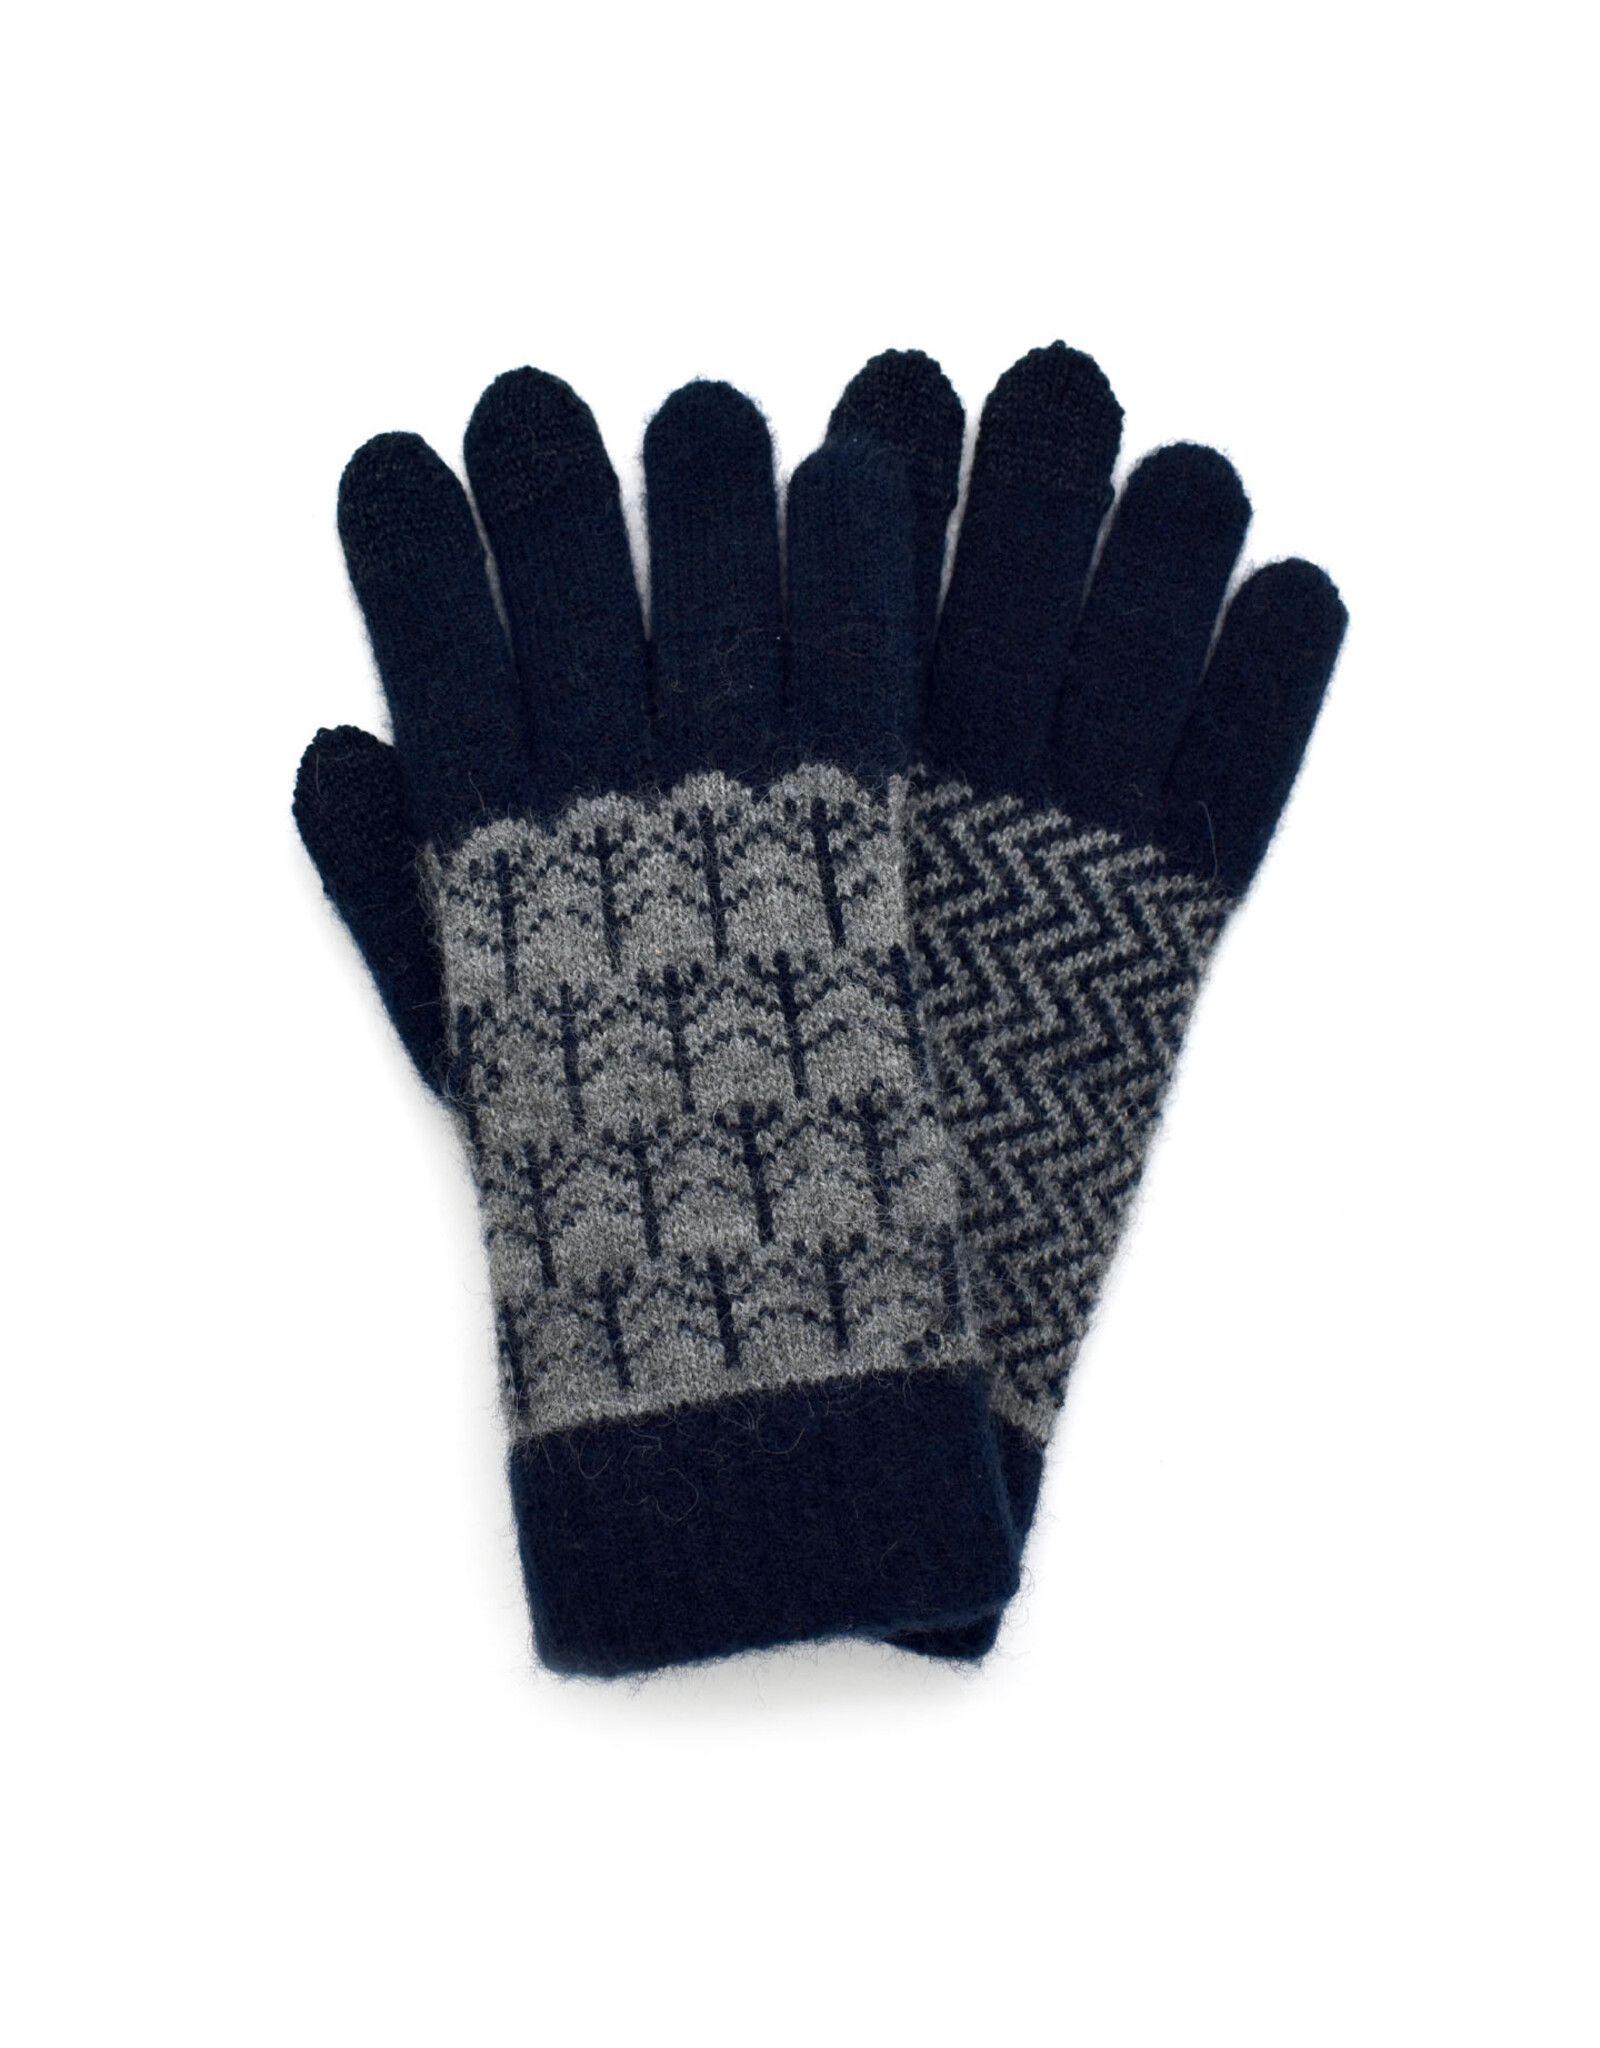 Jacquard Touchscreen Gloves - Trees (Dark Navy)